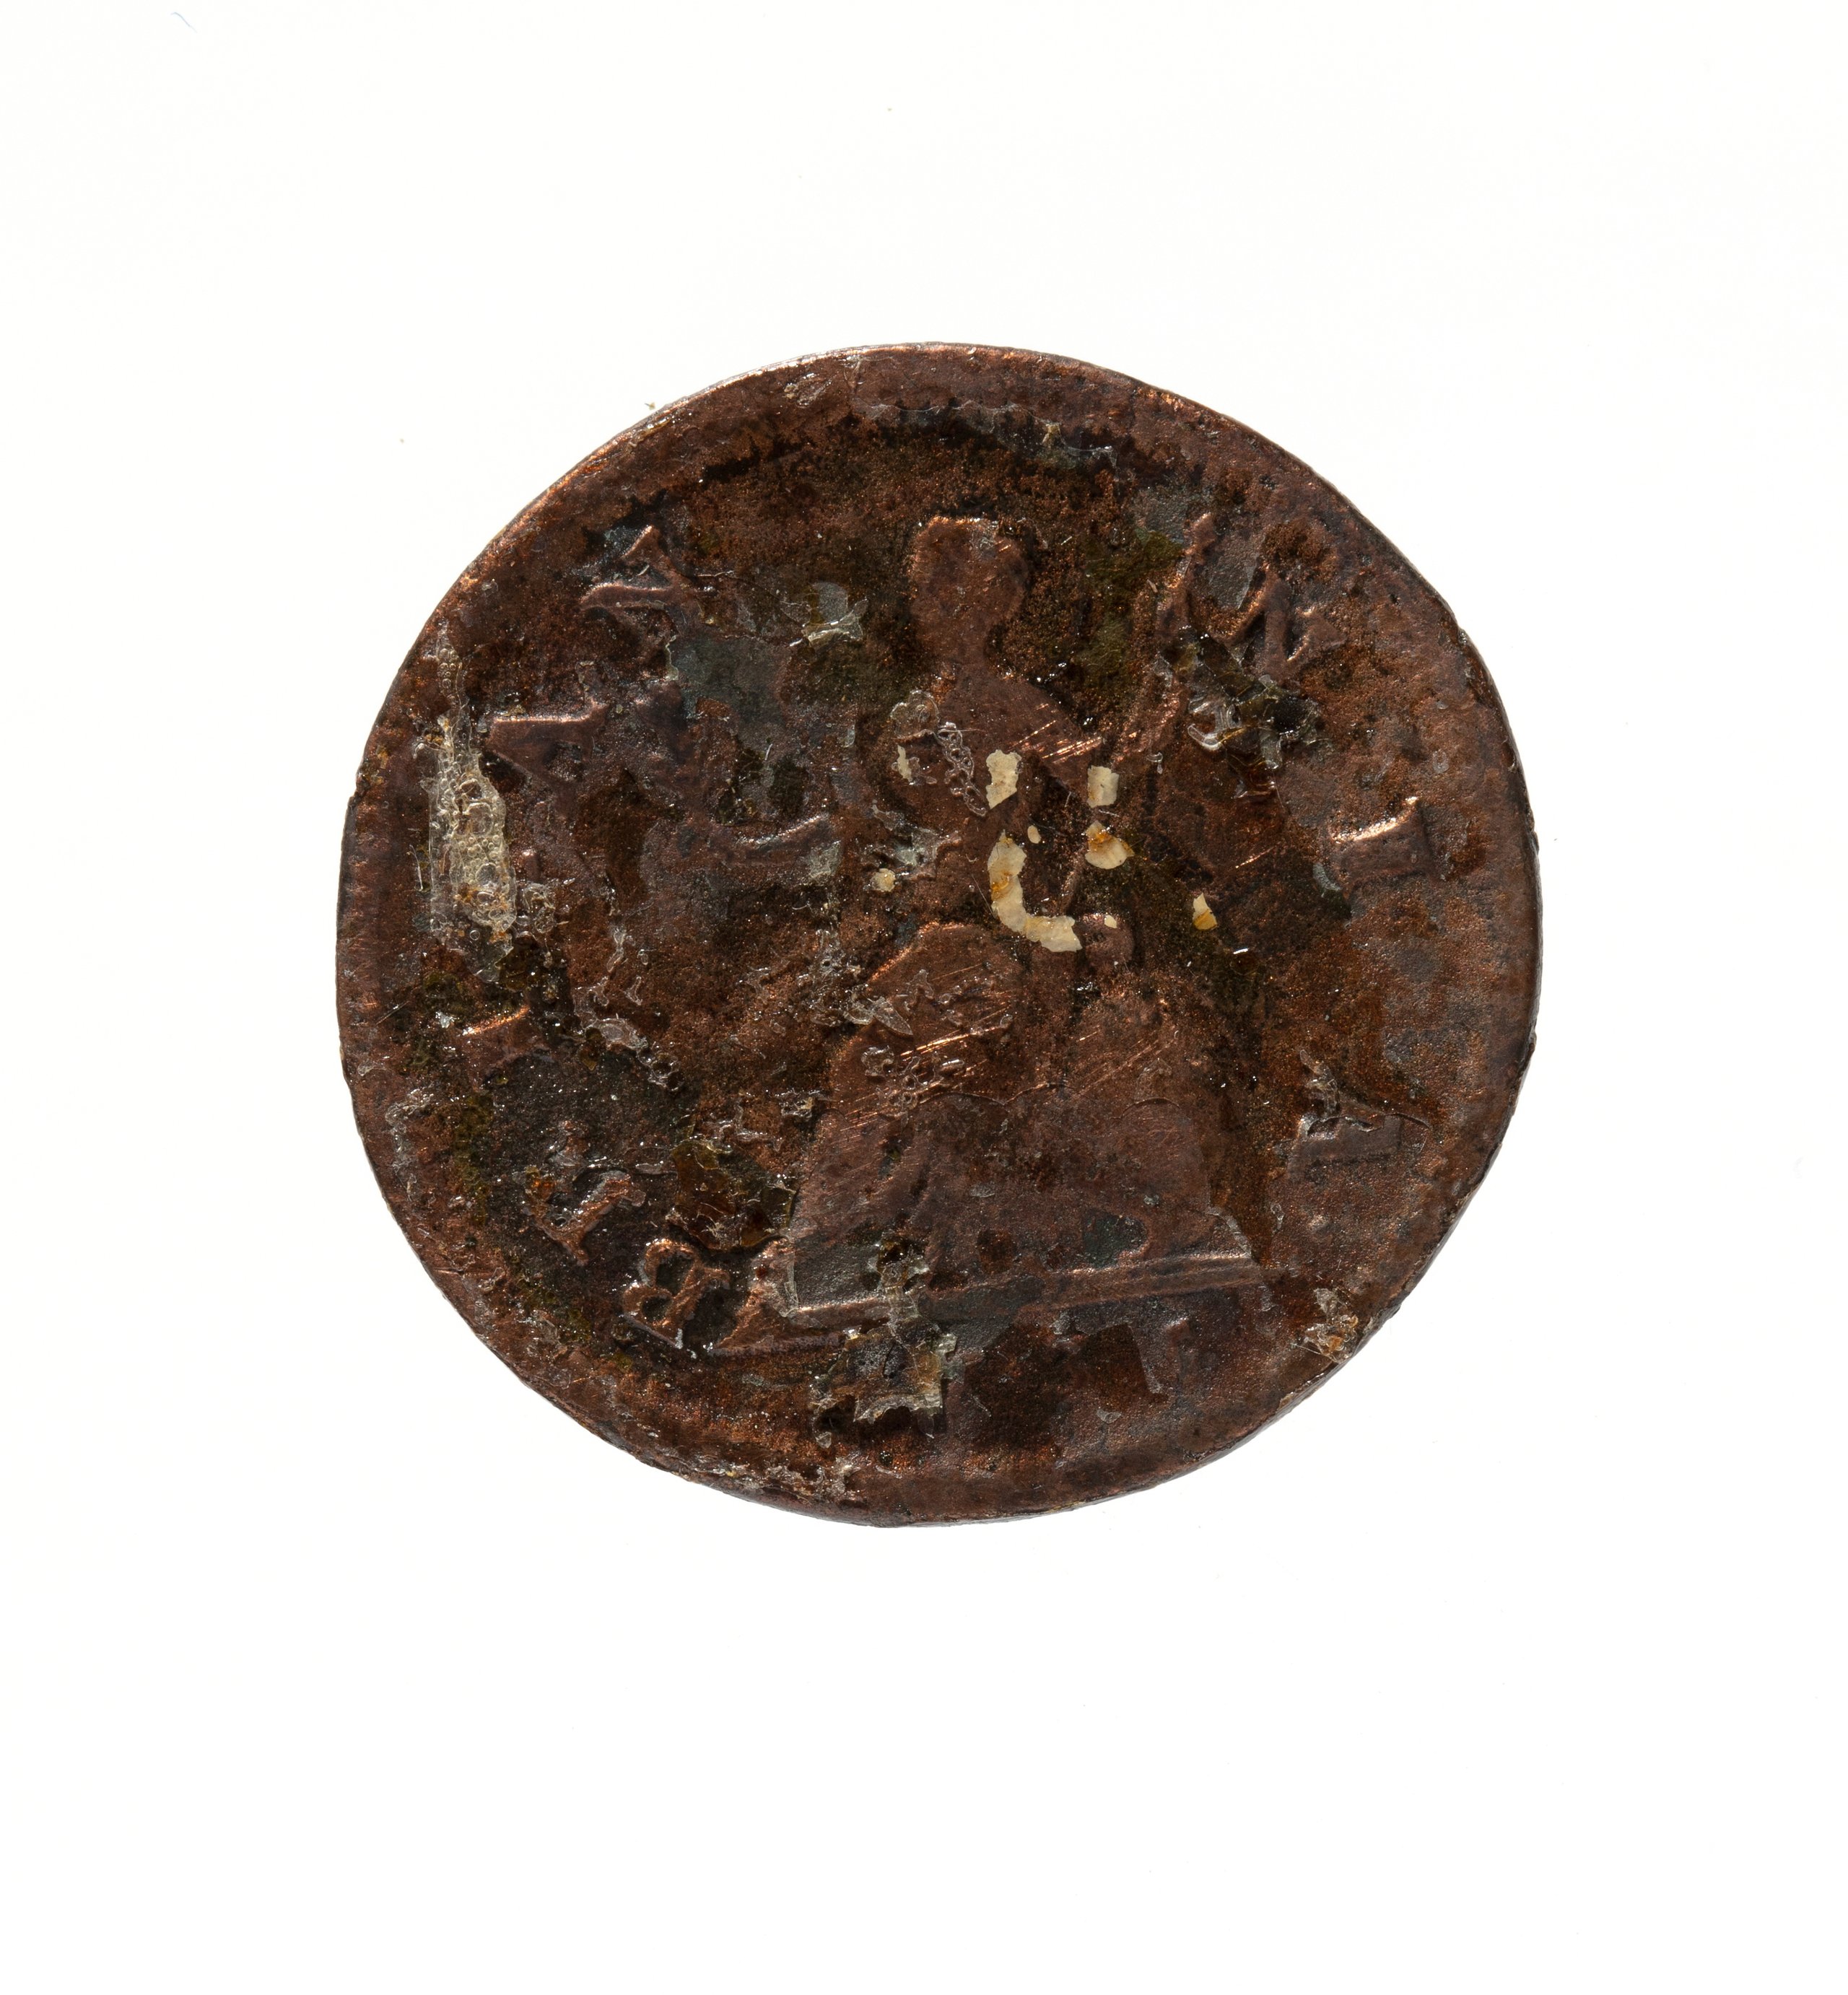 British Farthing coin